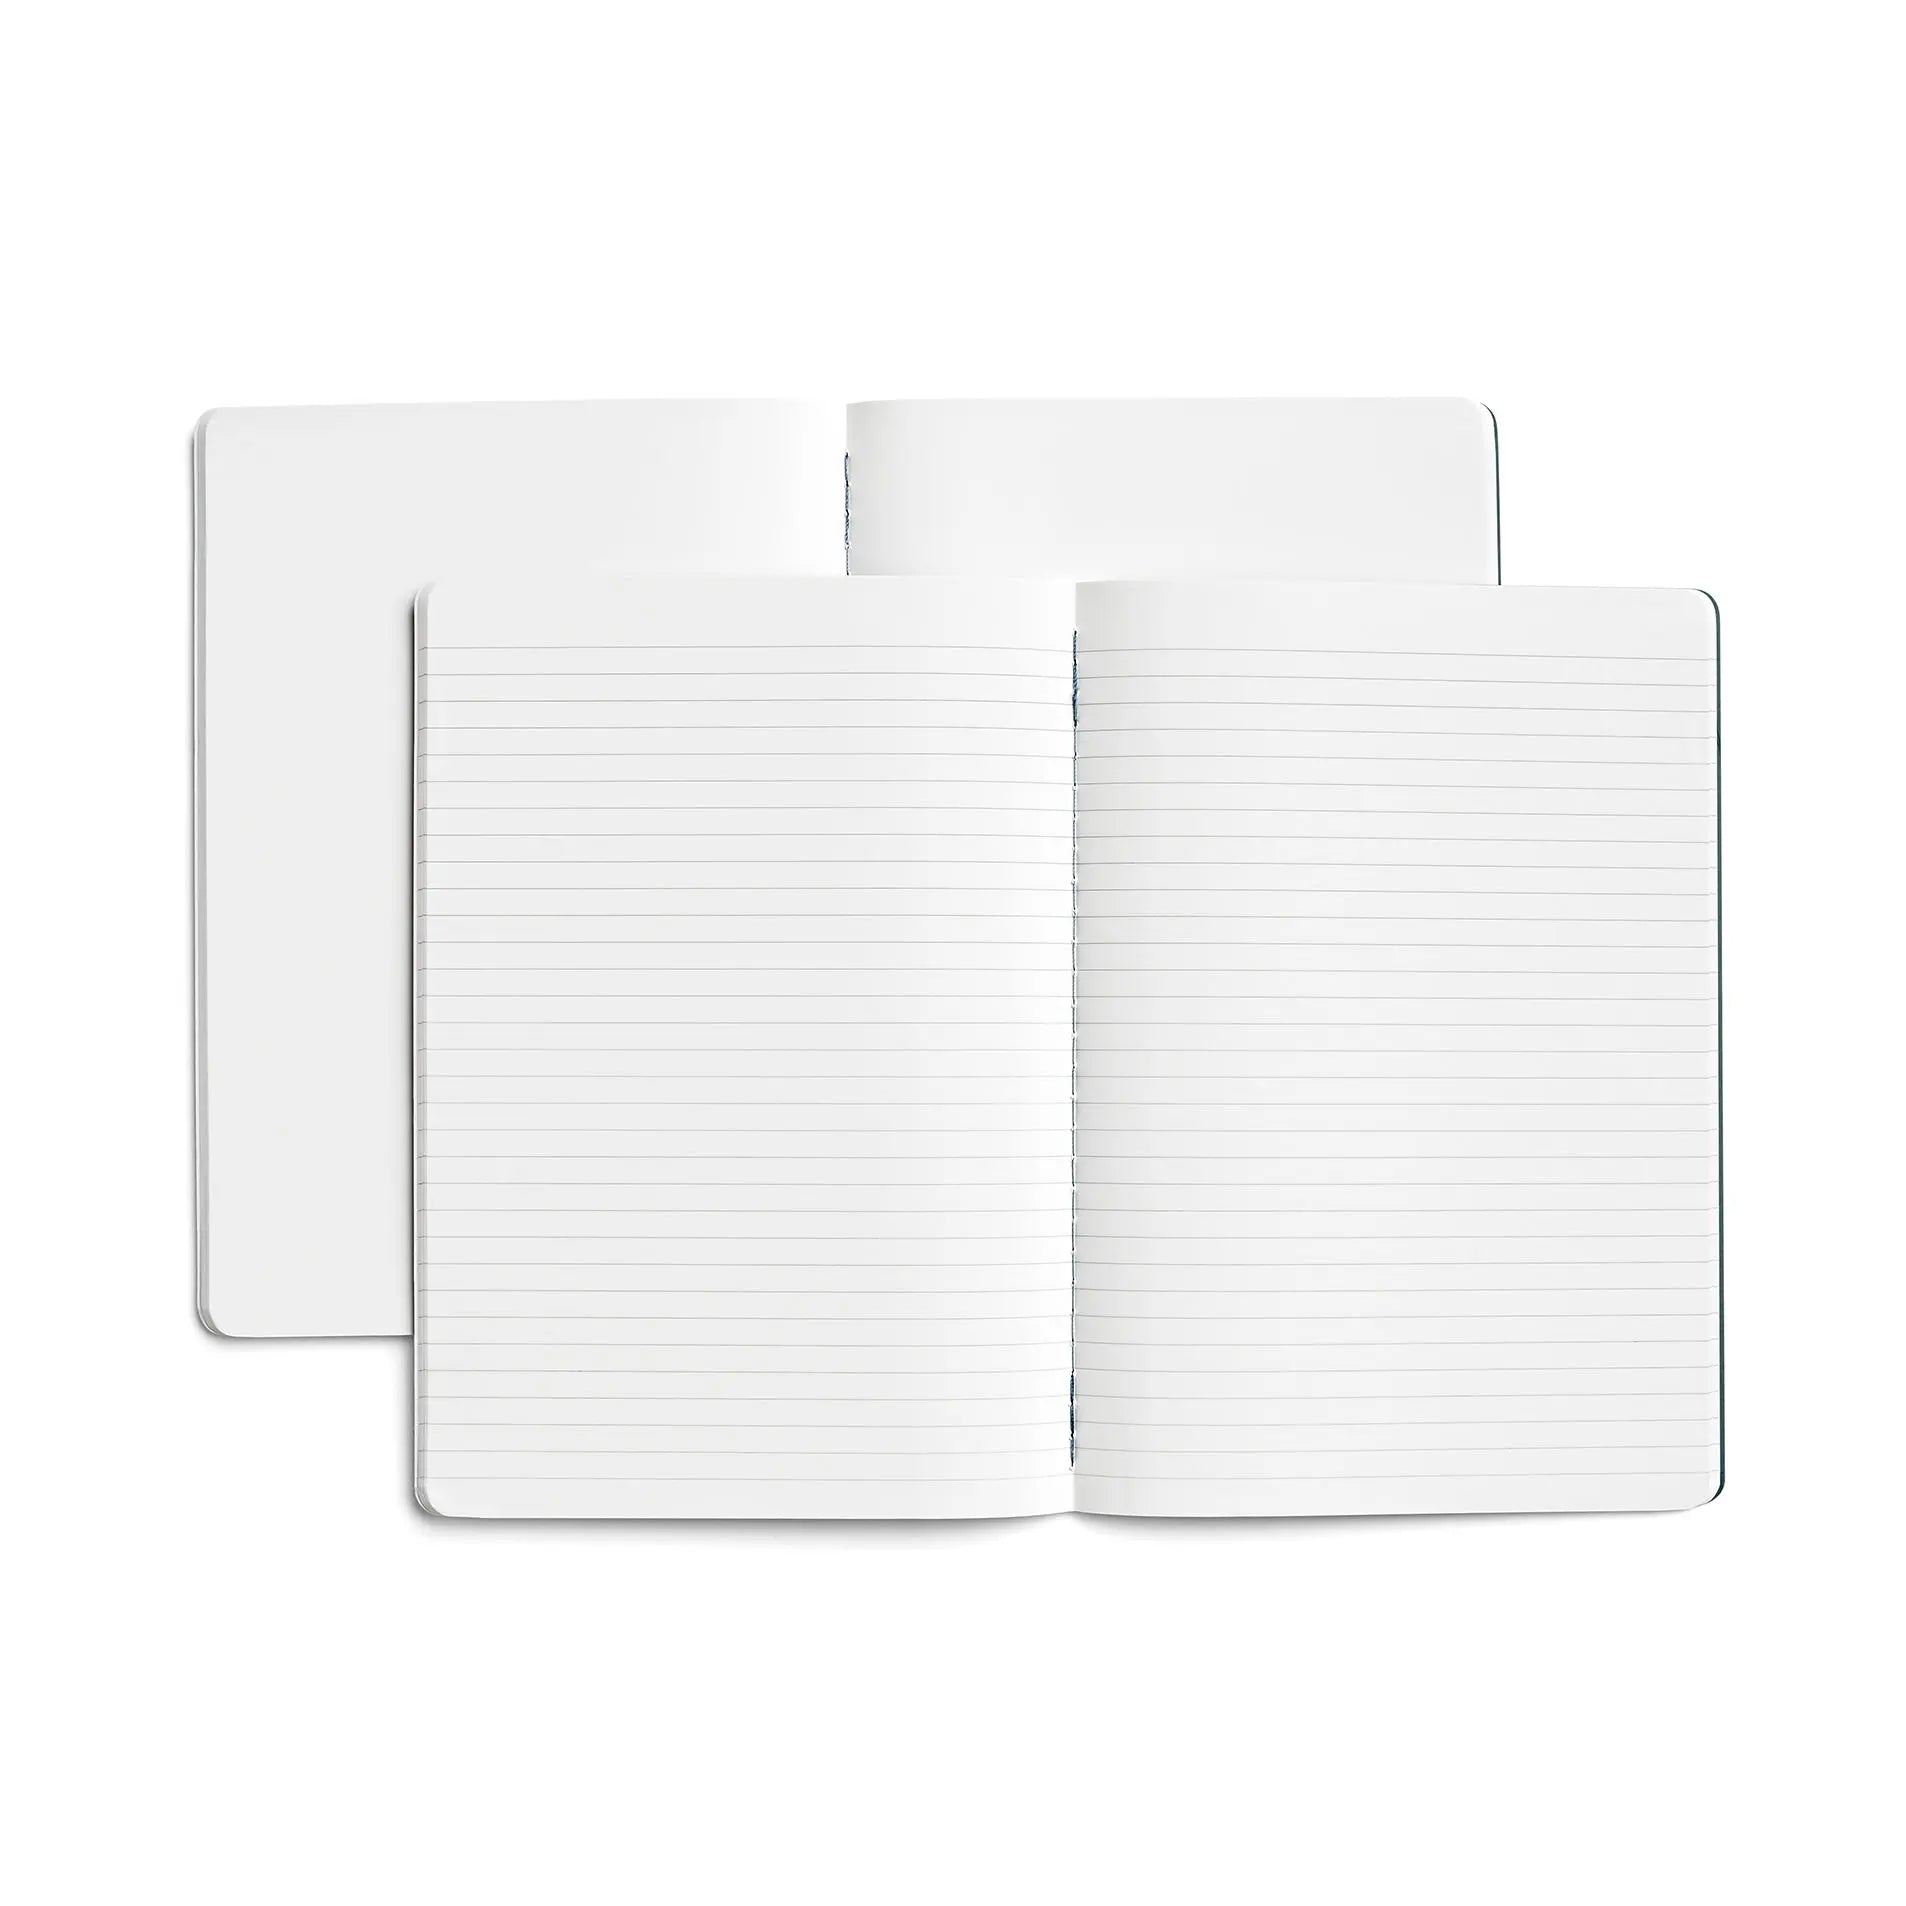 Karst stone paper journal A5 turmeric opengeslagen spread blanco en lijntjes